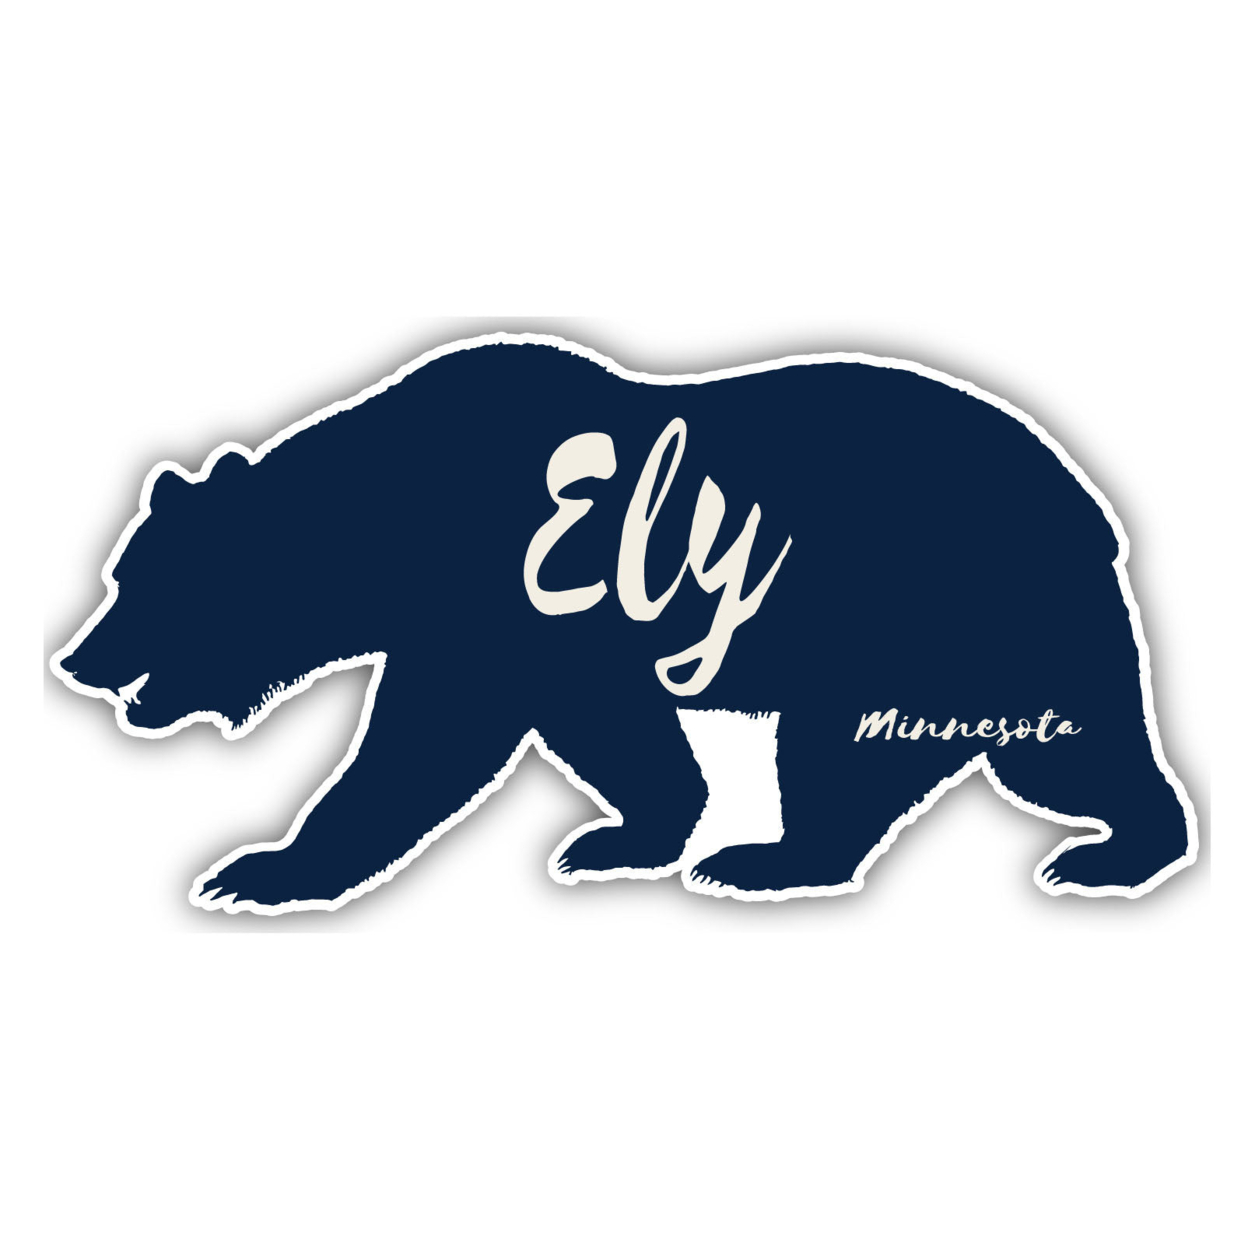 Ely Minnesota Souvenir Decorative Stickers (Choose Theme And Size) - Single Unit, 2-Inch, Bear